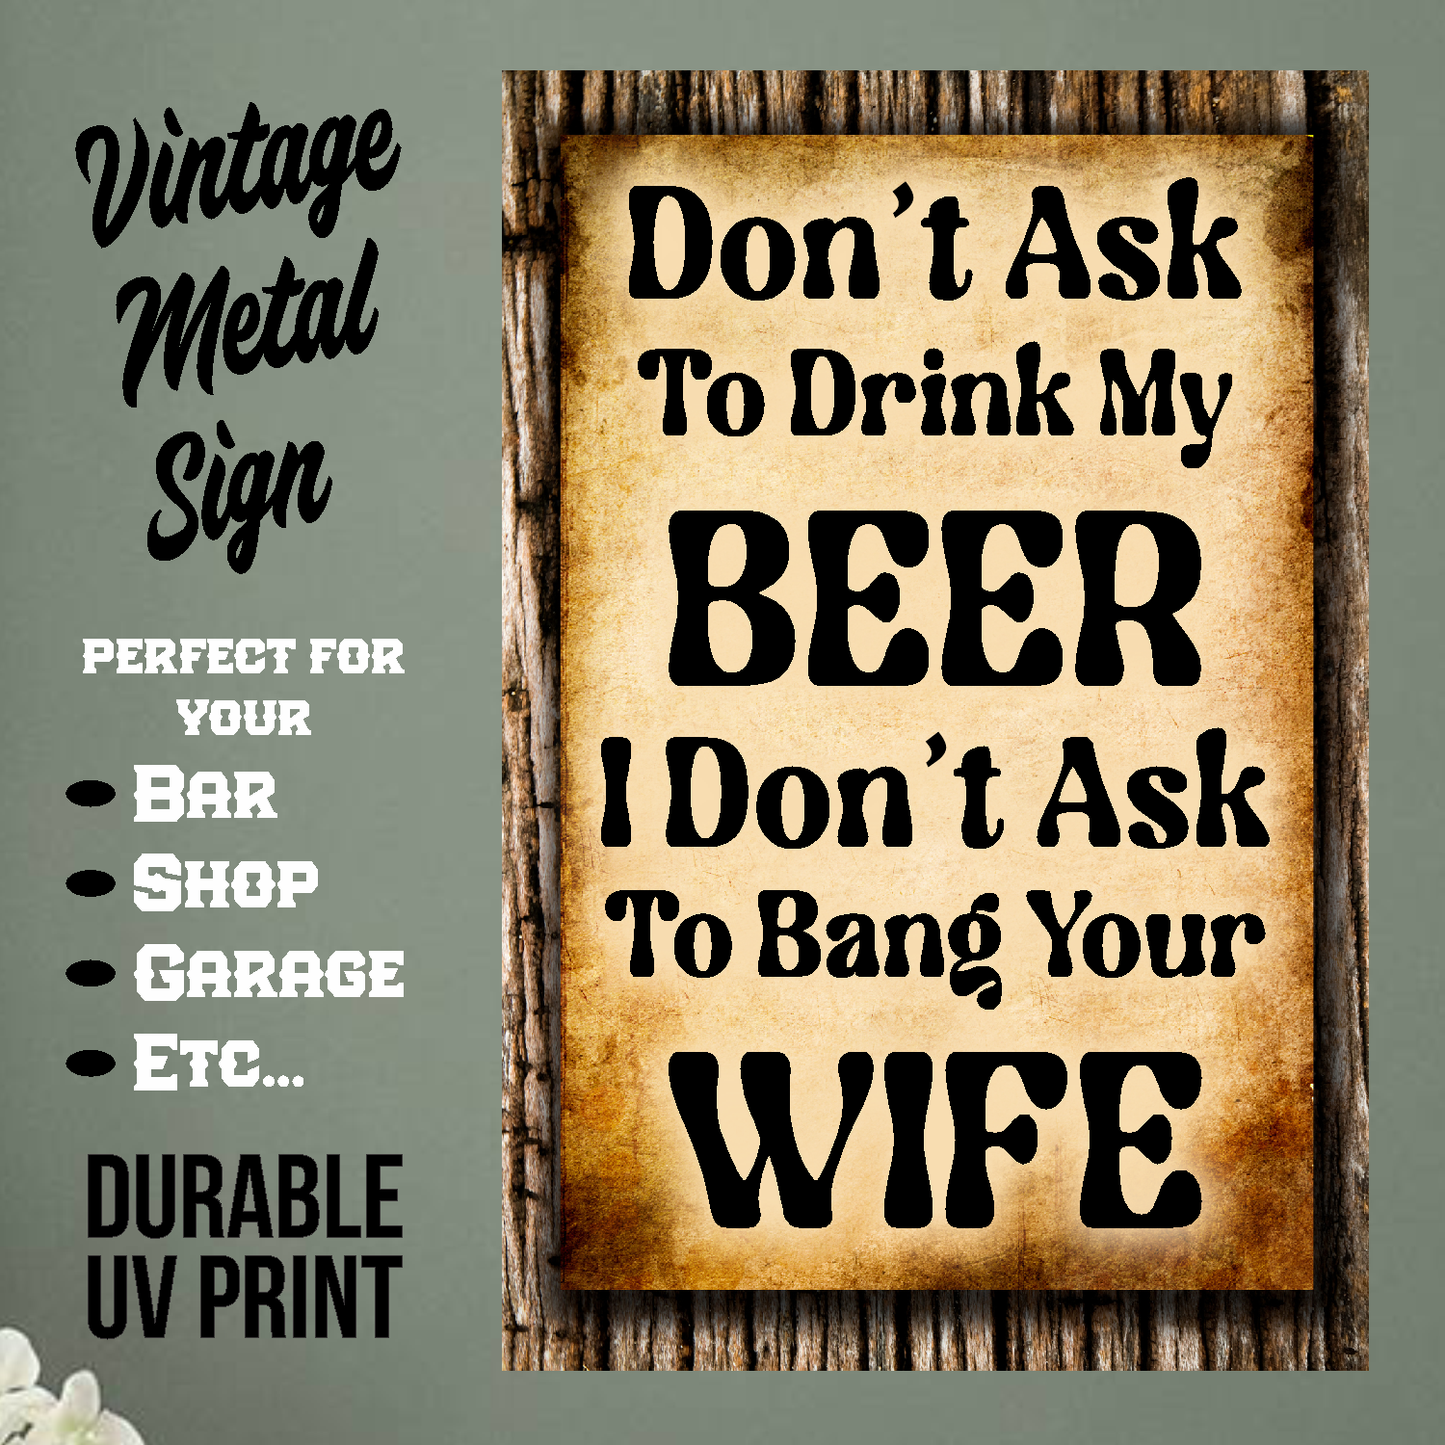 Don't Ask To Drink My Beer - 12" x 18" Vintage Metal Sign